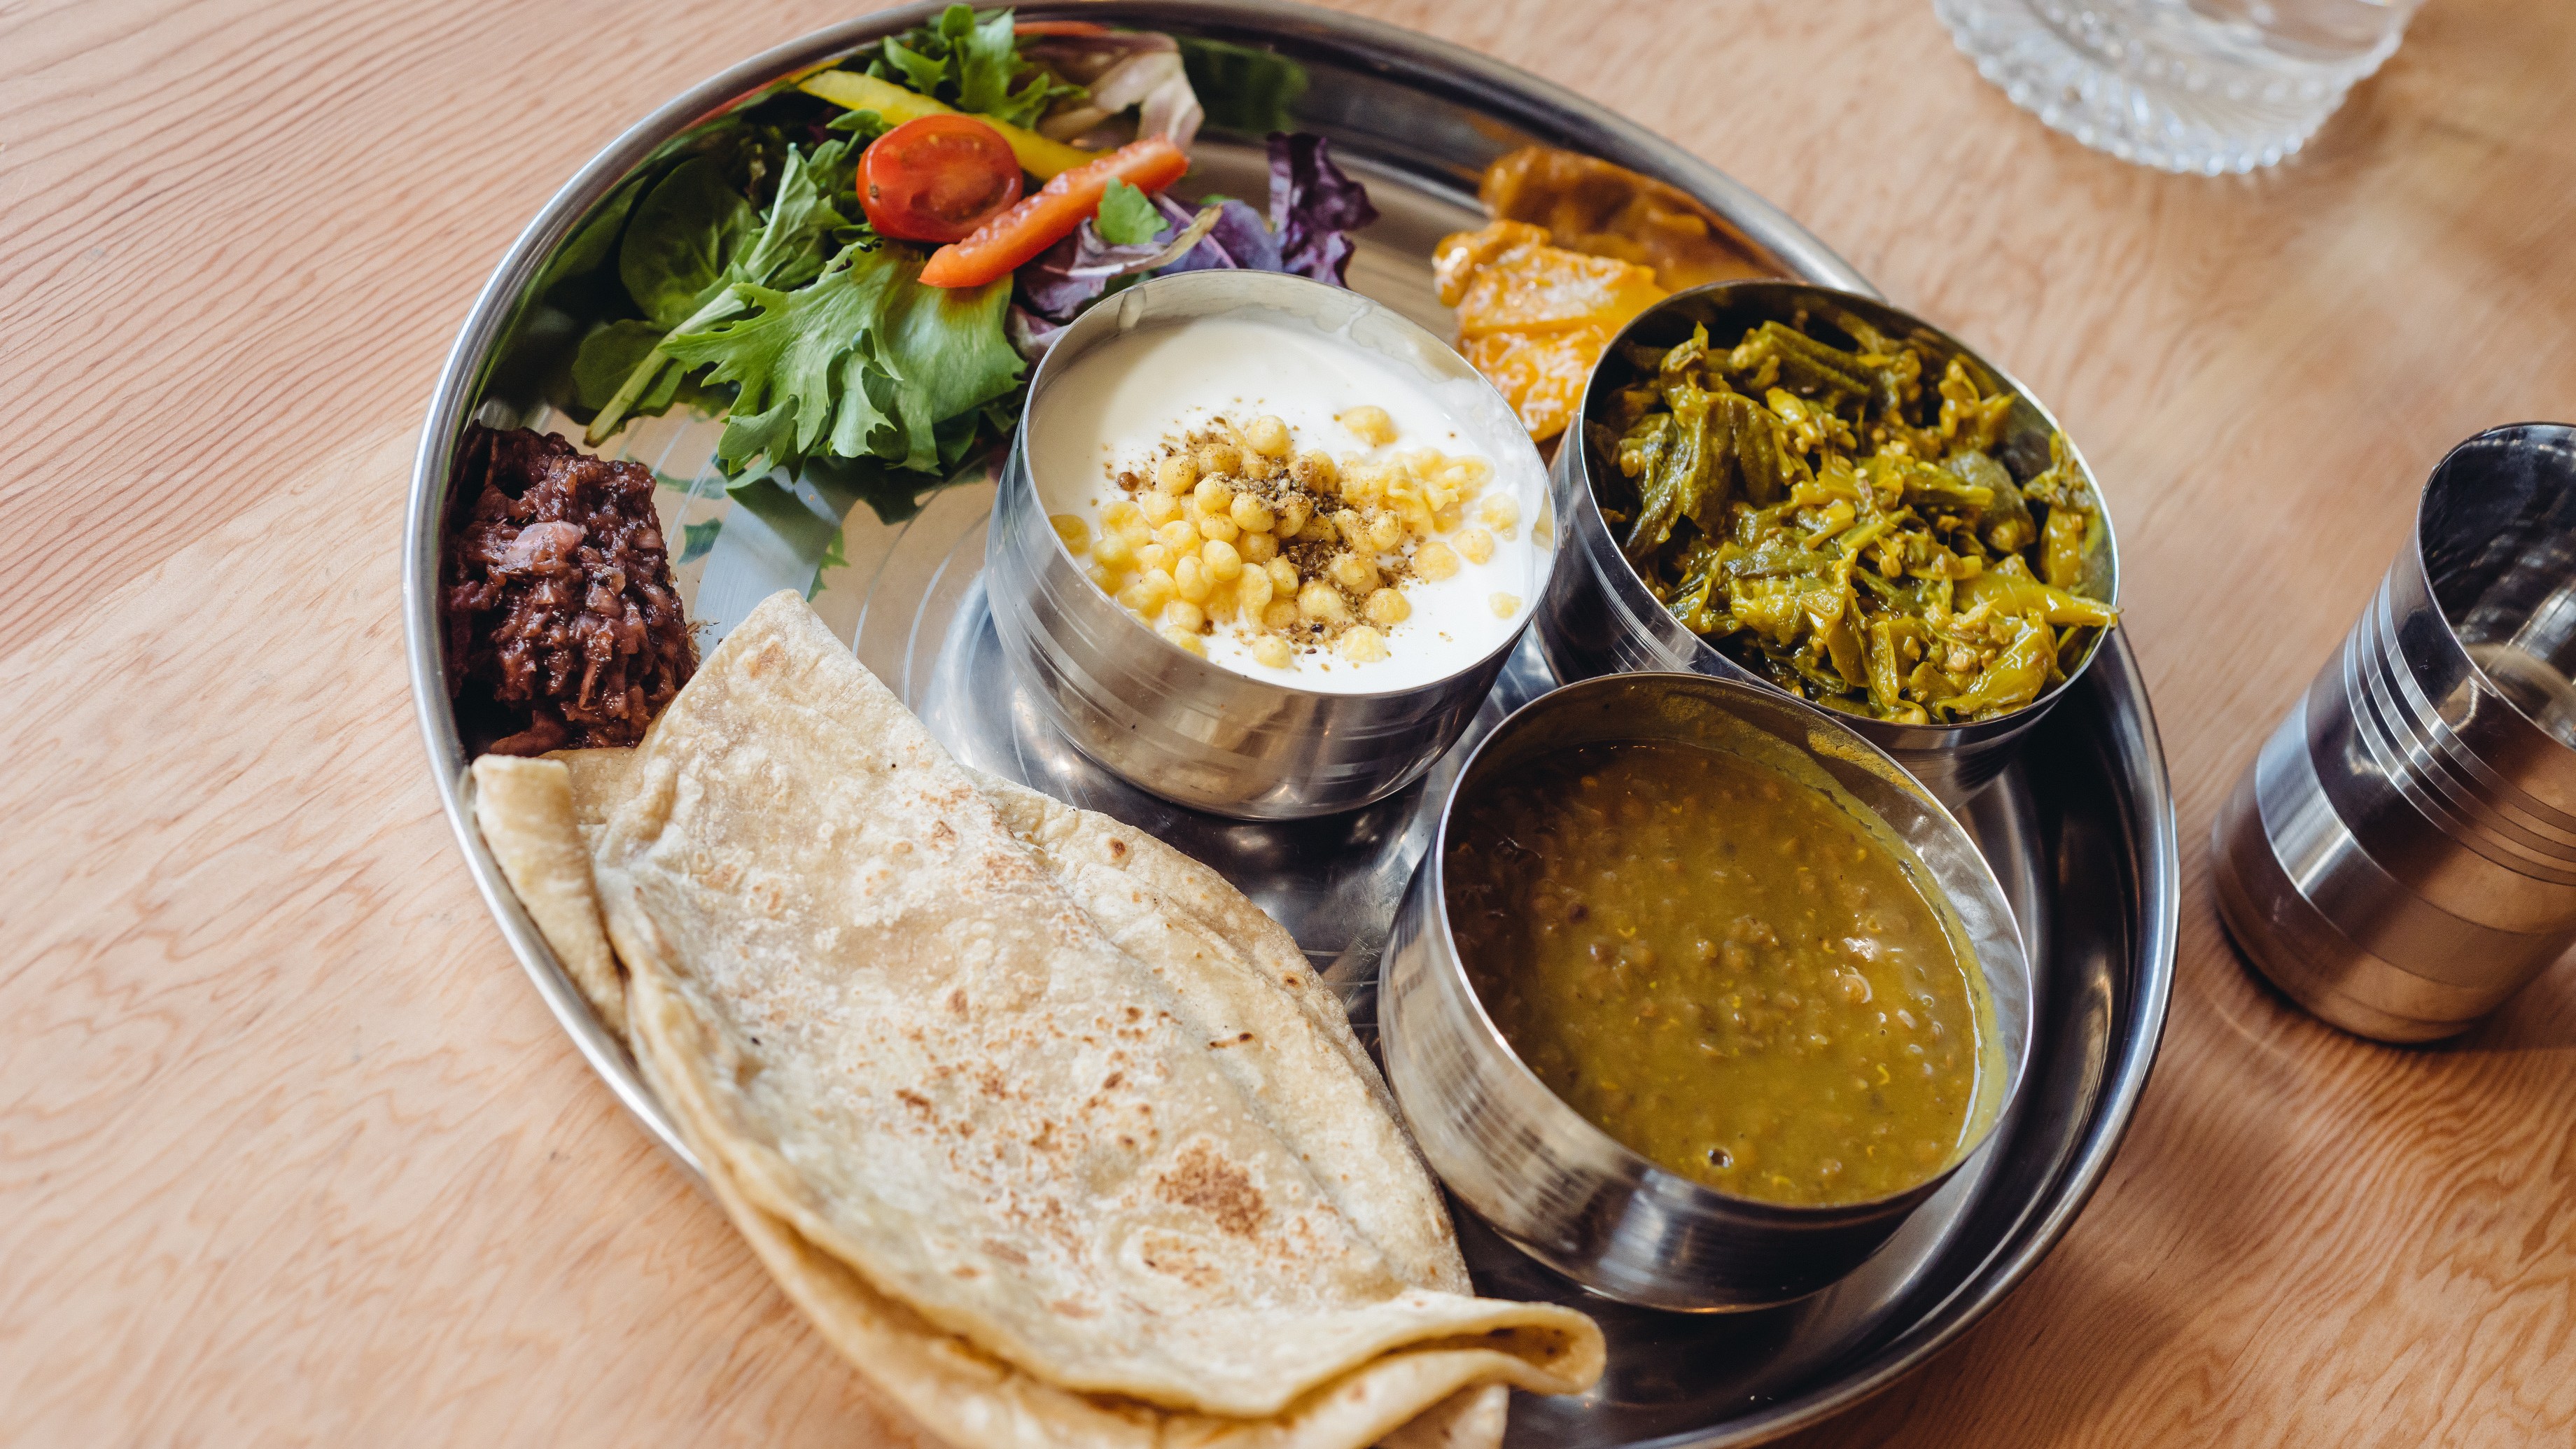 Nowhere else in Edinburgh or Glasgow does vegetarian Indian food this good